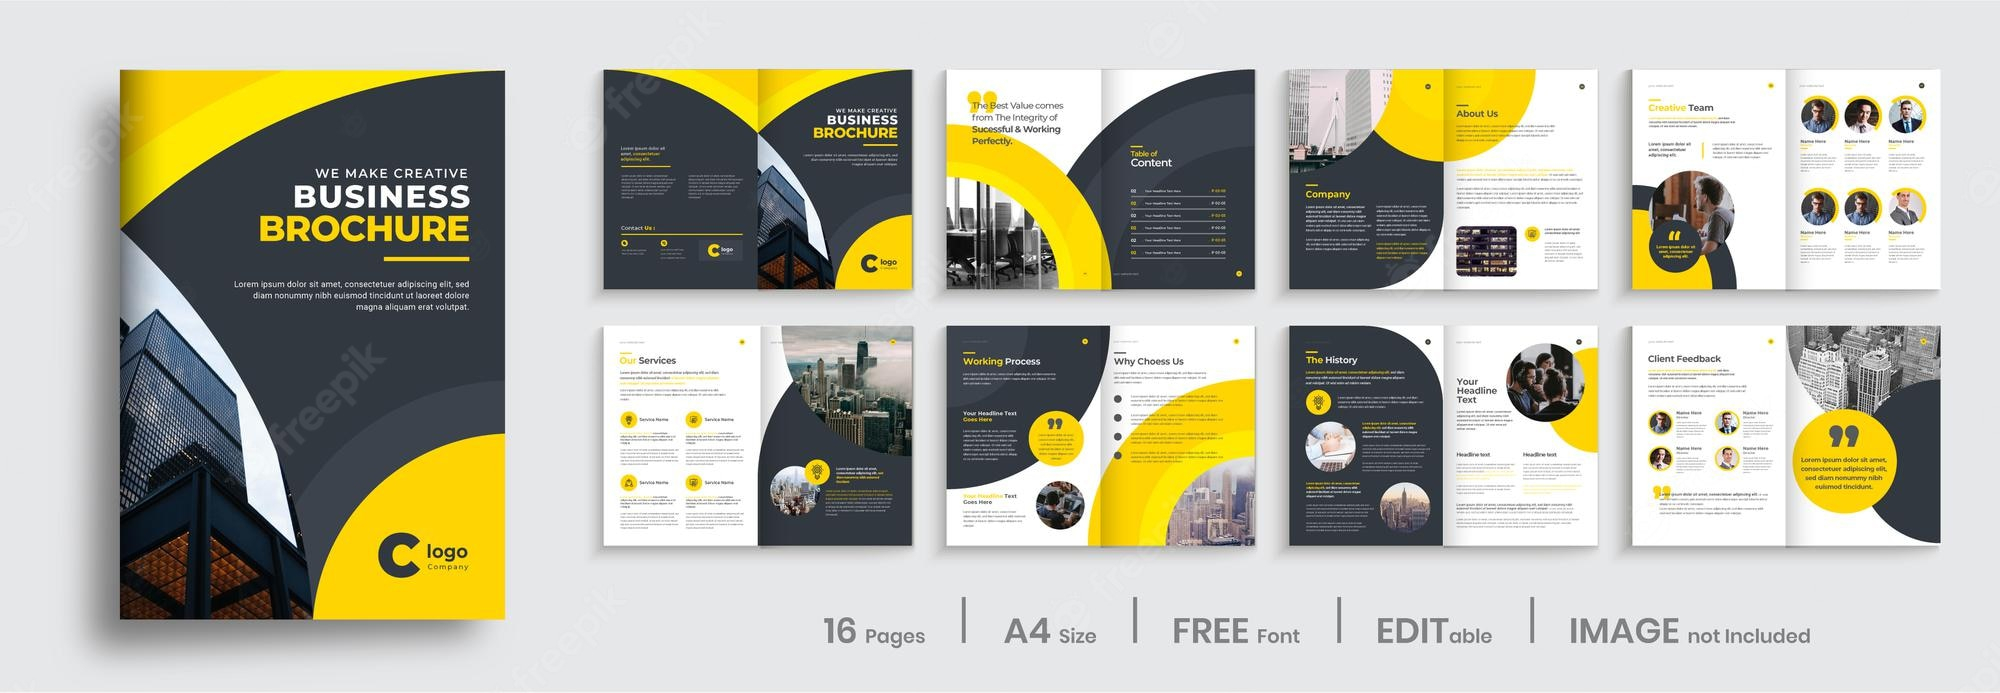 Brochure template Vectors & Illustrations for Free Download  Freepik Throughout Online Free Brochure Design Templates